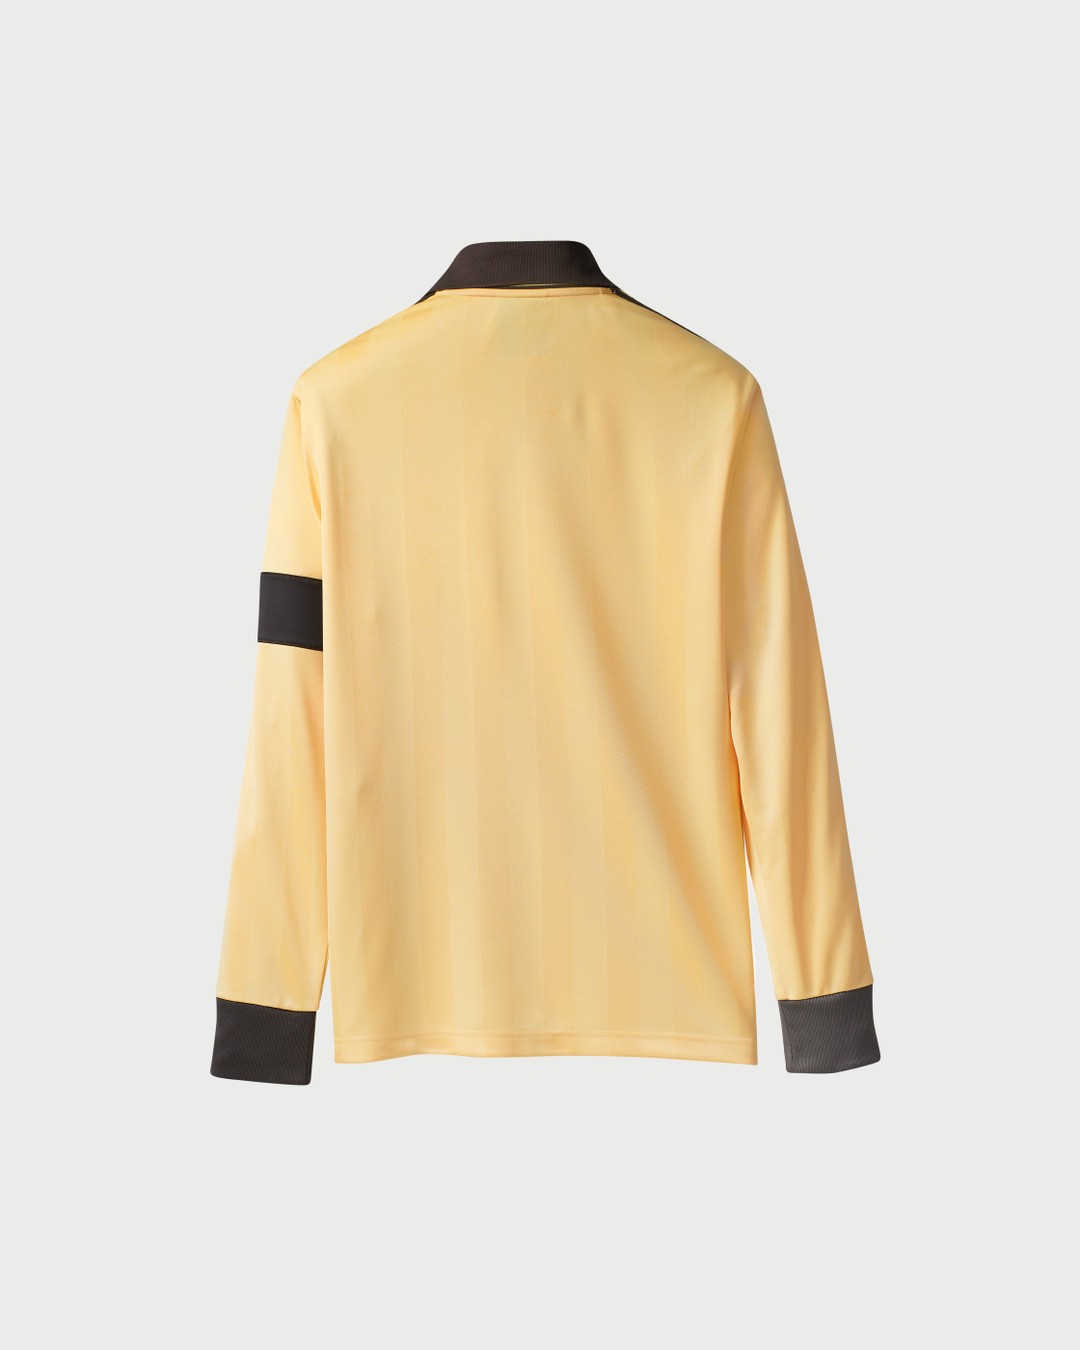 Adidas x Wales Bonner – Football Jersey Orange Tint - Polos - Yellow - Image 2